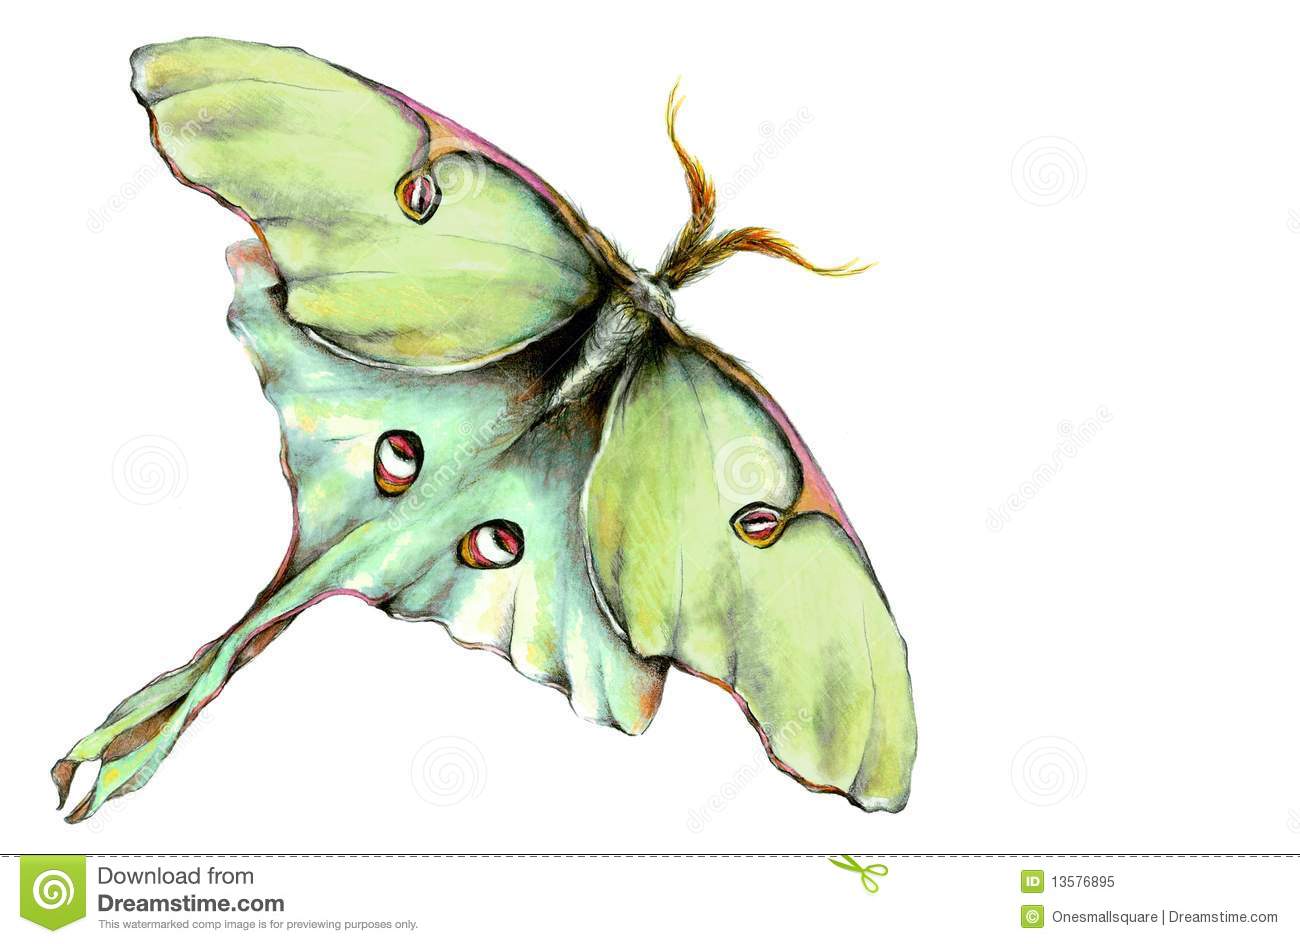 Luna Moth Illustration Royalty Free Stock Photo   Image  13576895